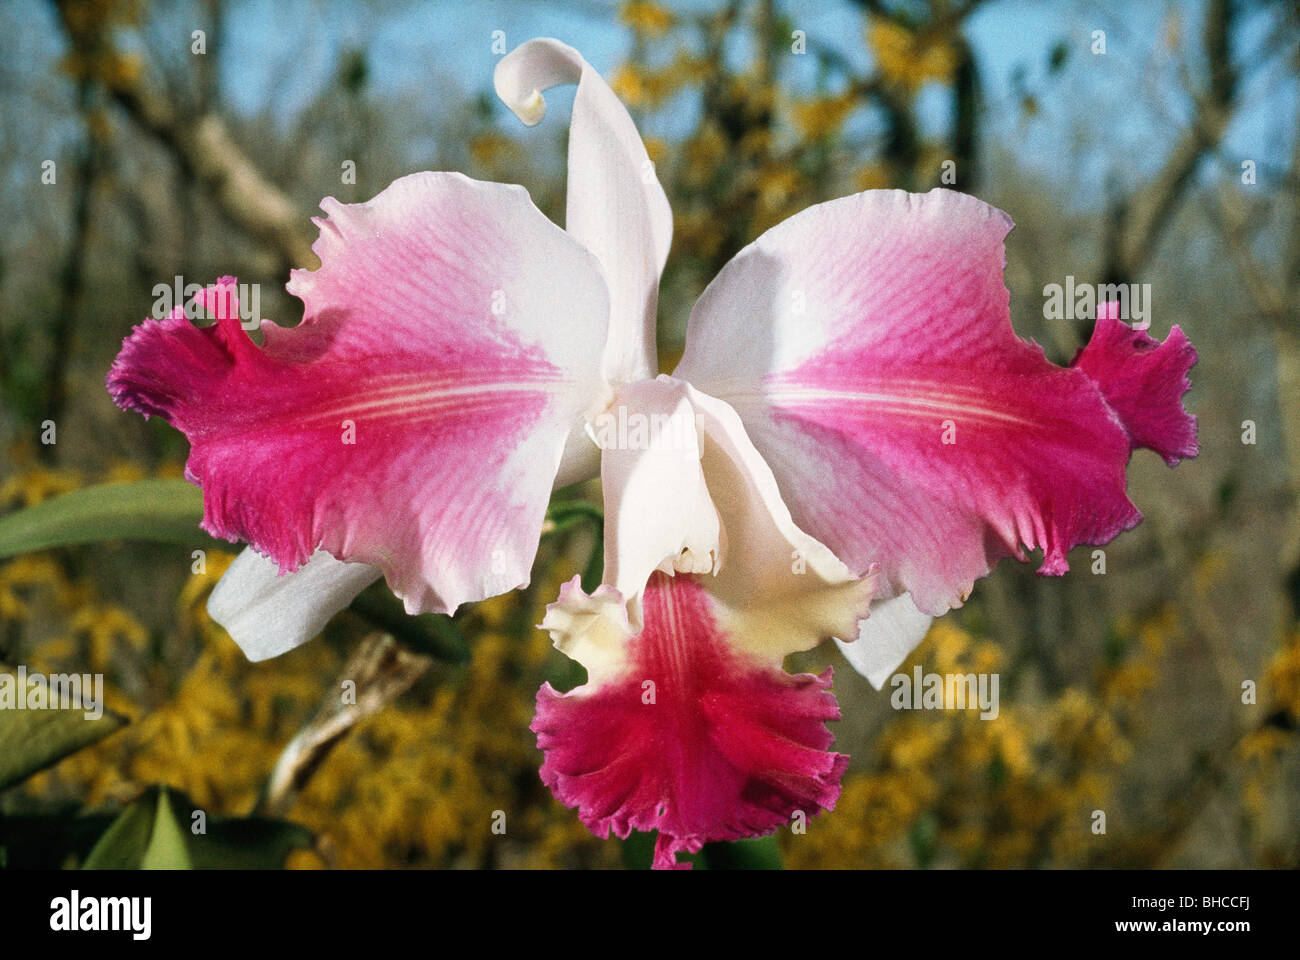 Cattleya labiata orchid, South America Stock Photo